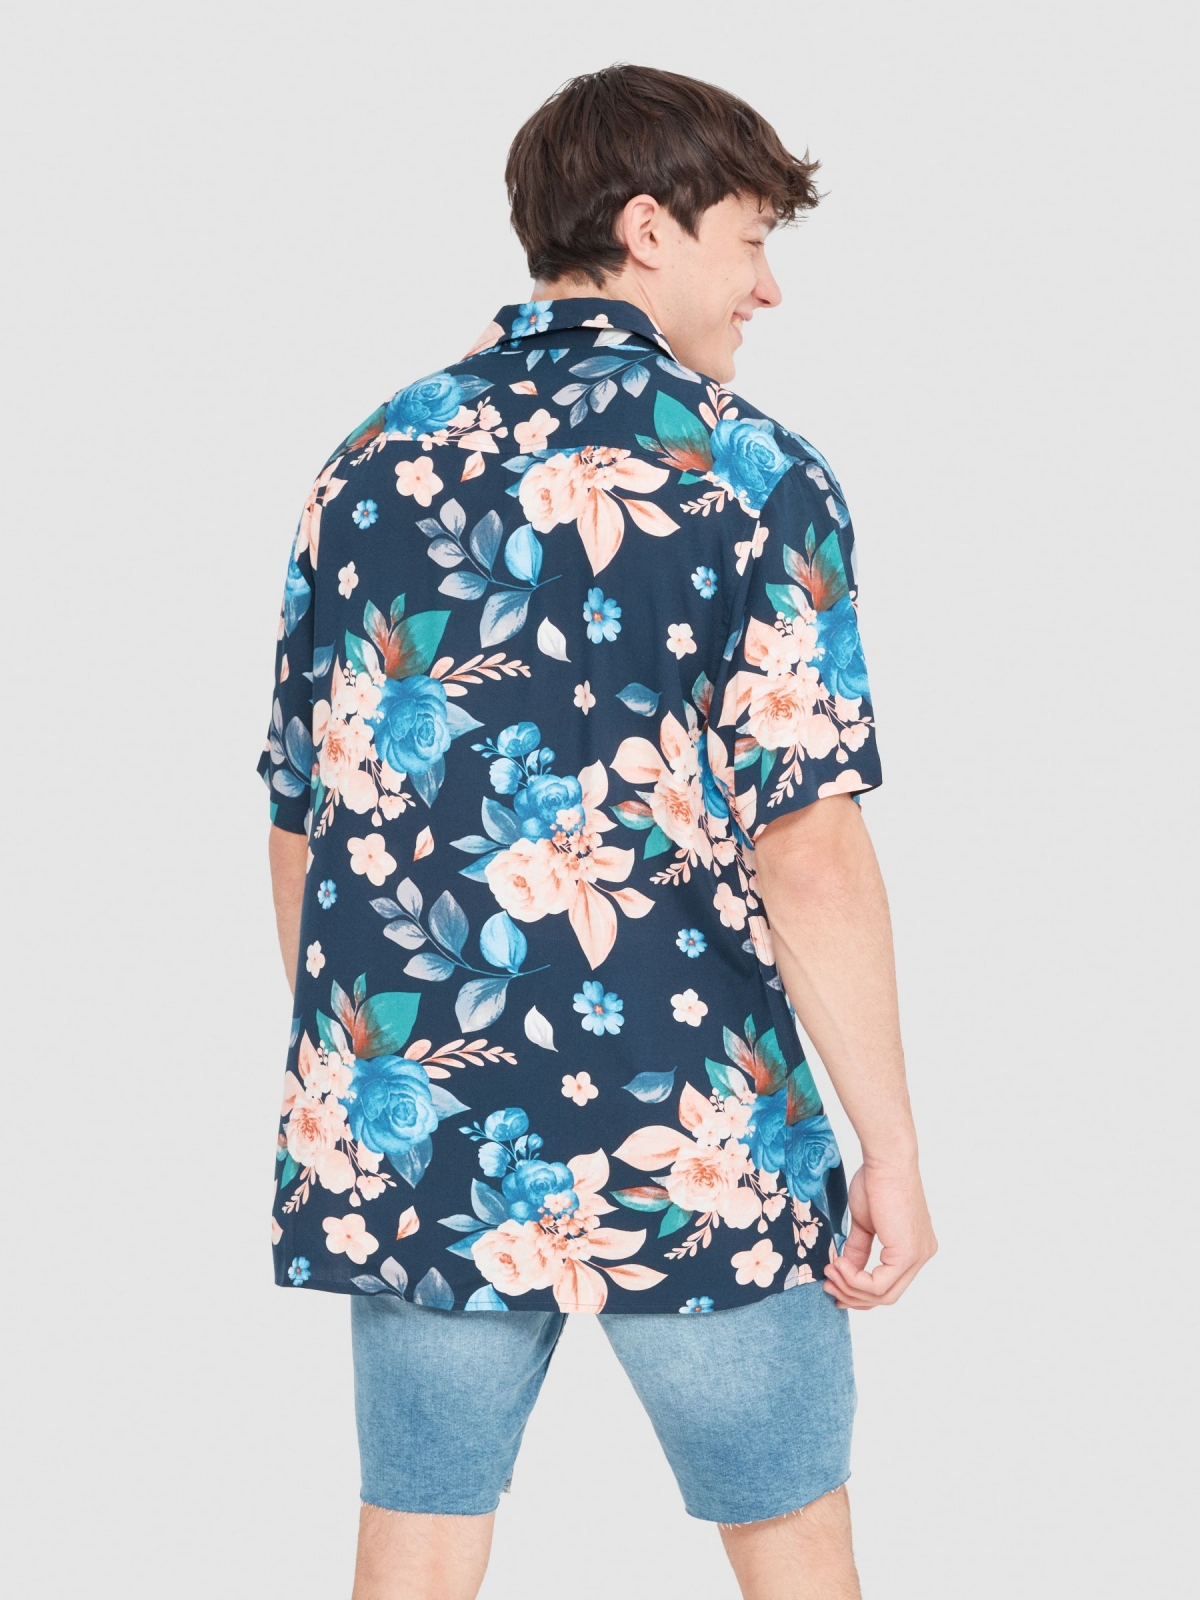 Floral shirt blue middle back view